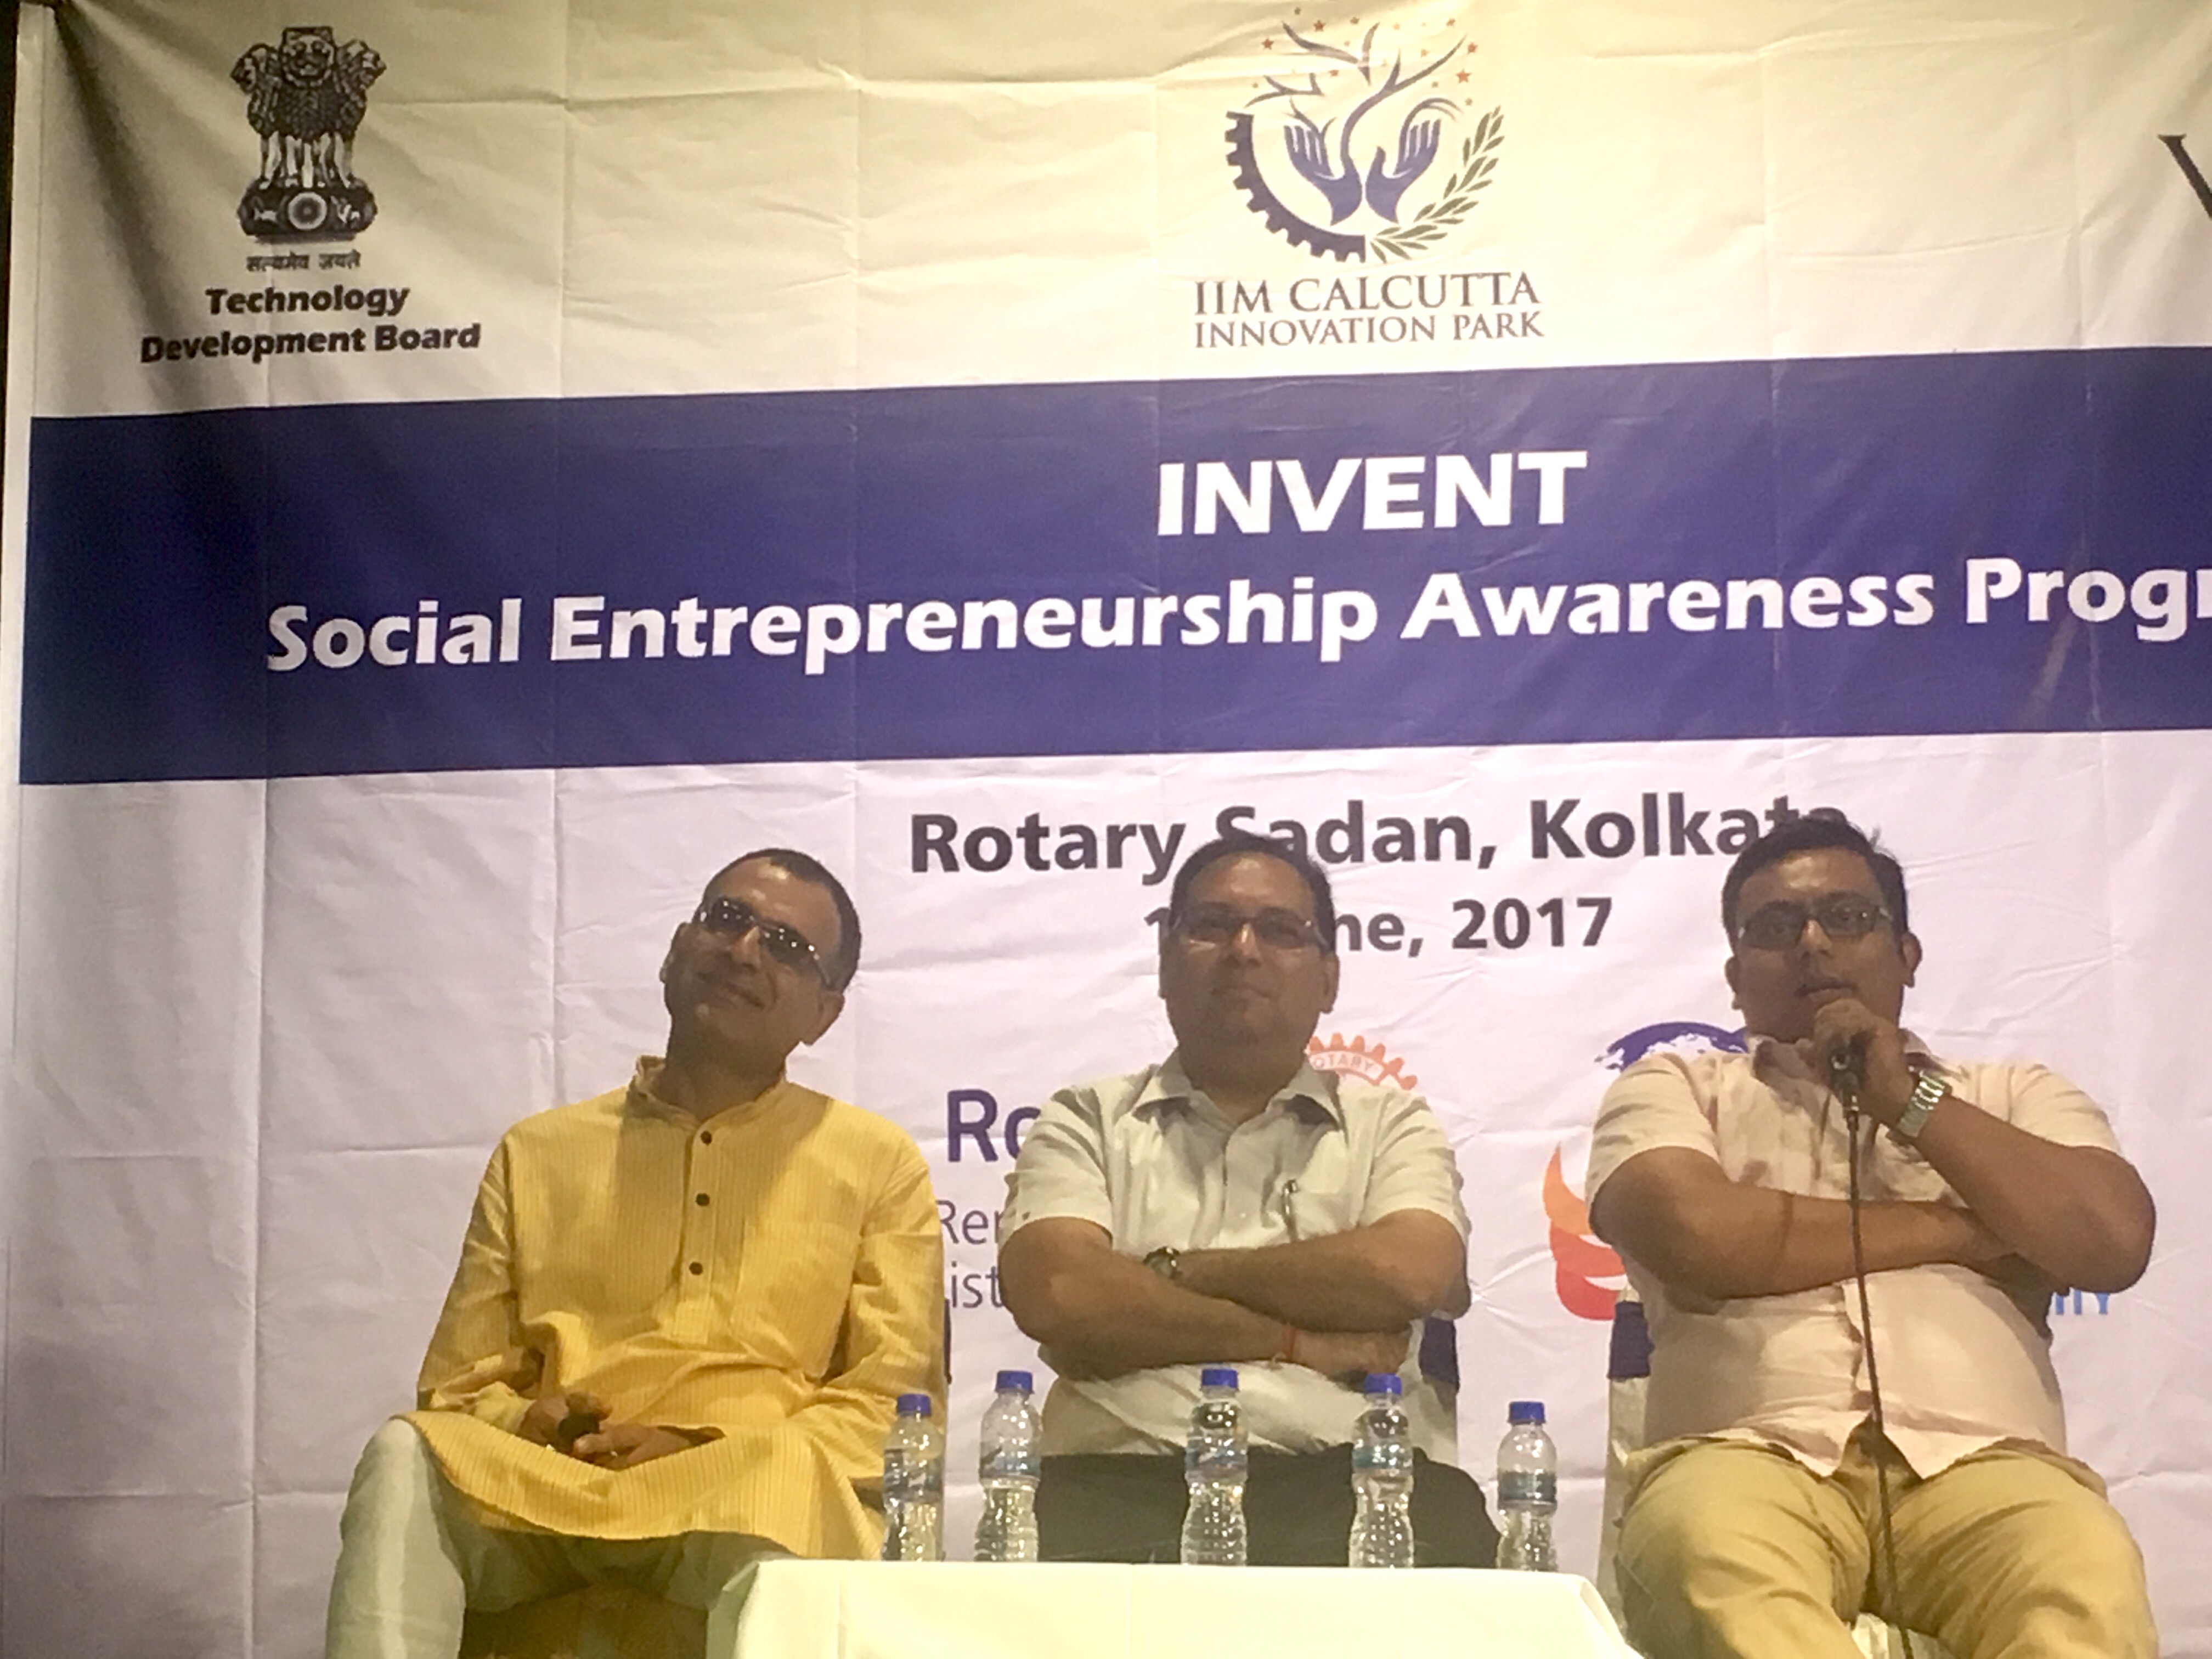 INVENT Social Entrepreneurship Awareness Programme at Rotary Sadan